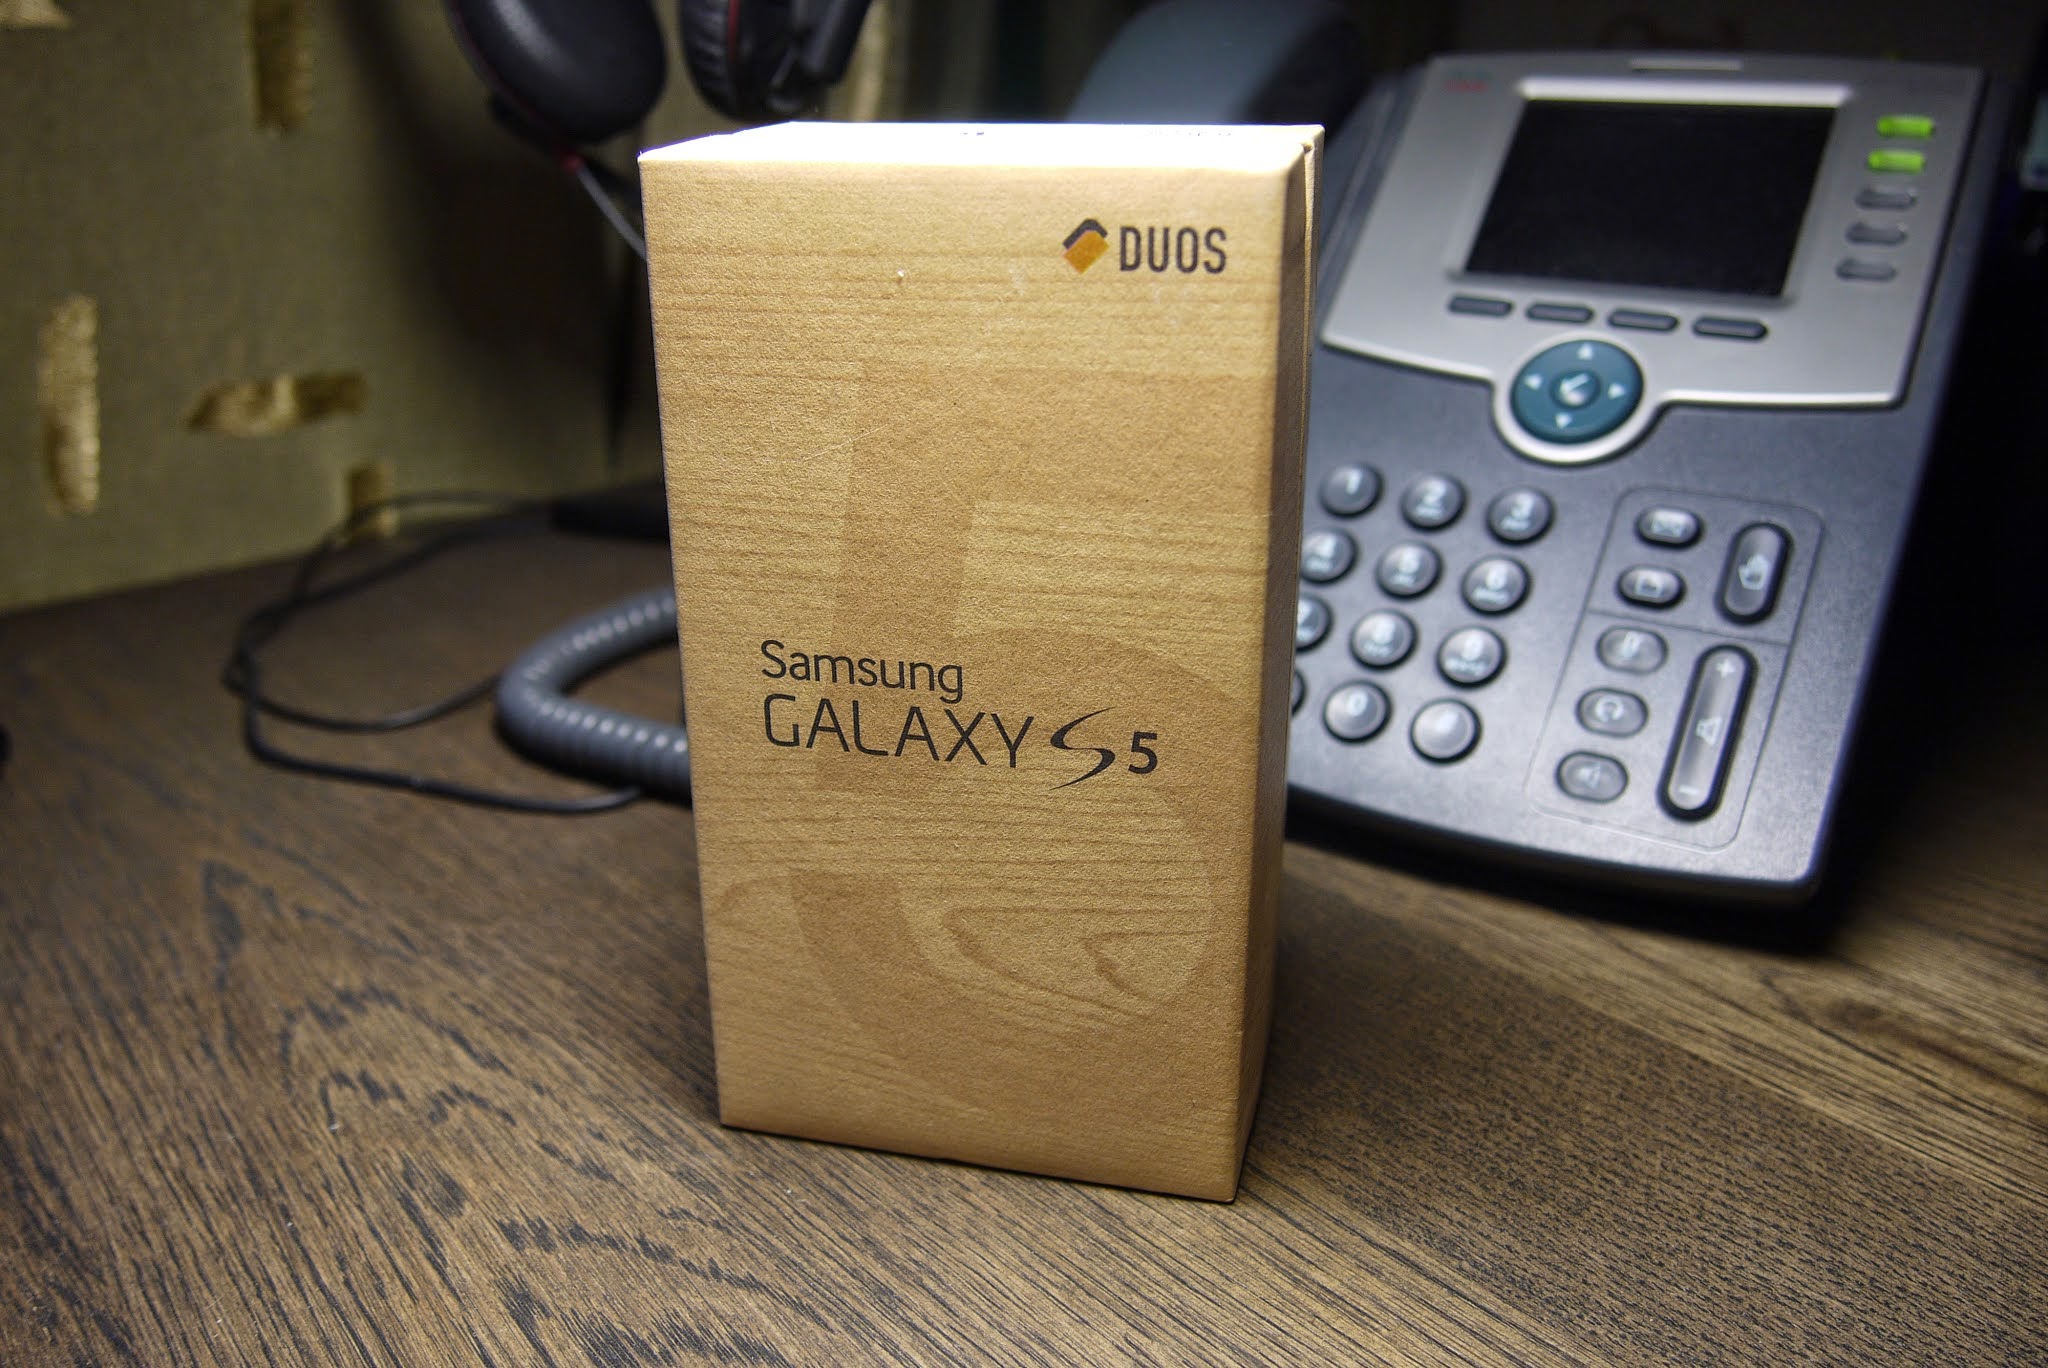 Samsung Galaxy S5 Duos. Упаковка. Коробка обычная, картонная.